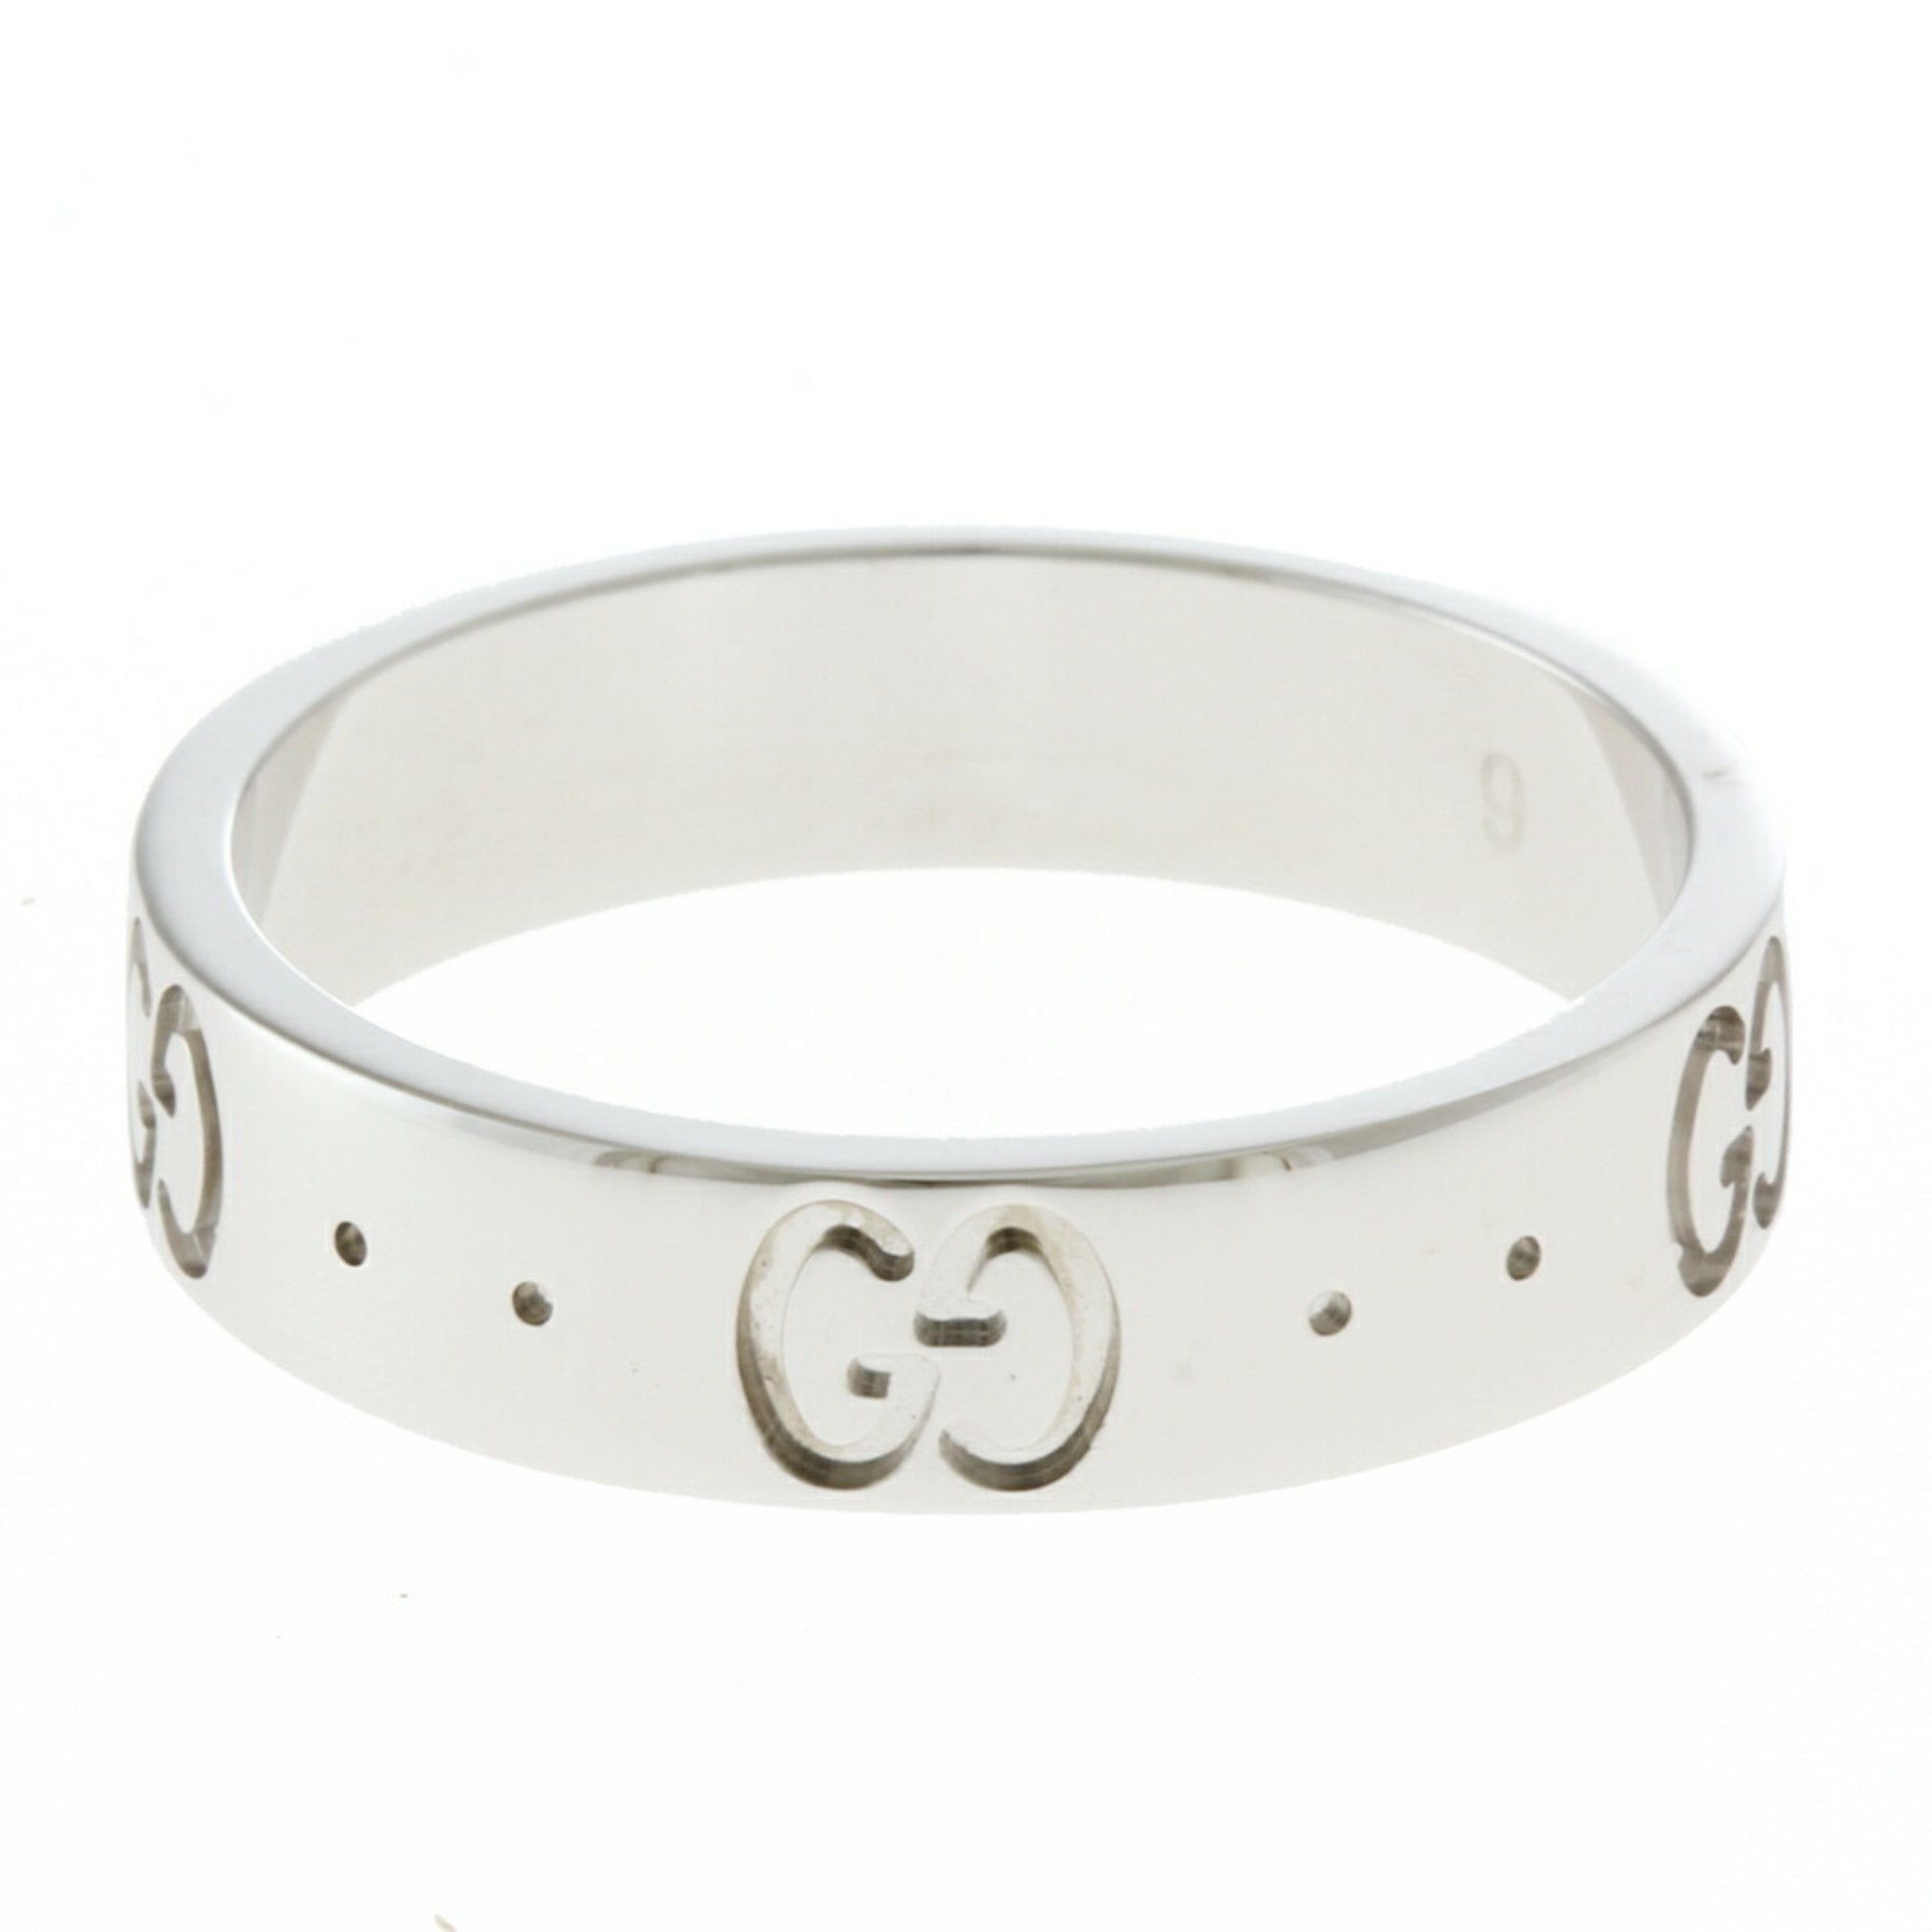 Gucci Ring No. 8.5 18K K18 White Gold Ladies GUCCI